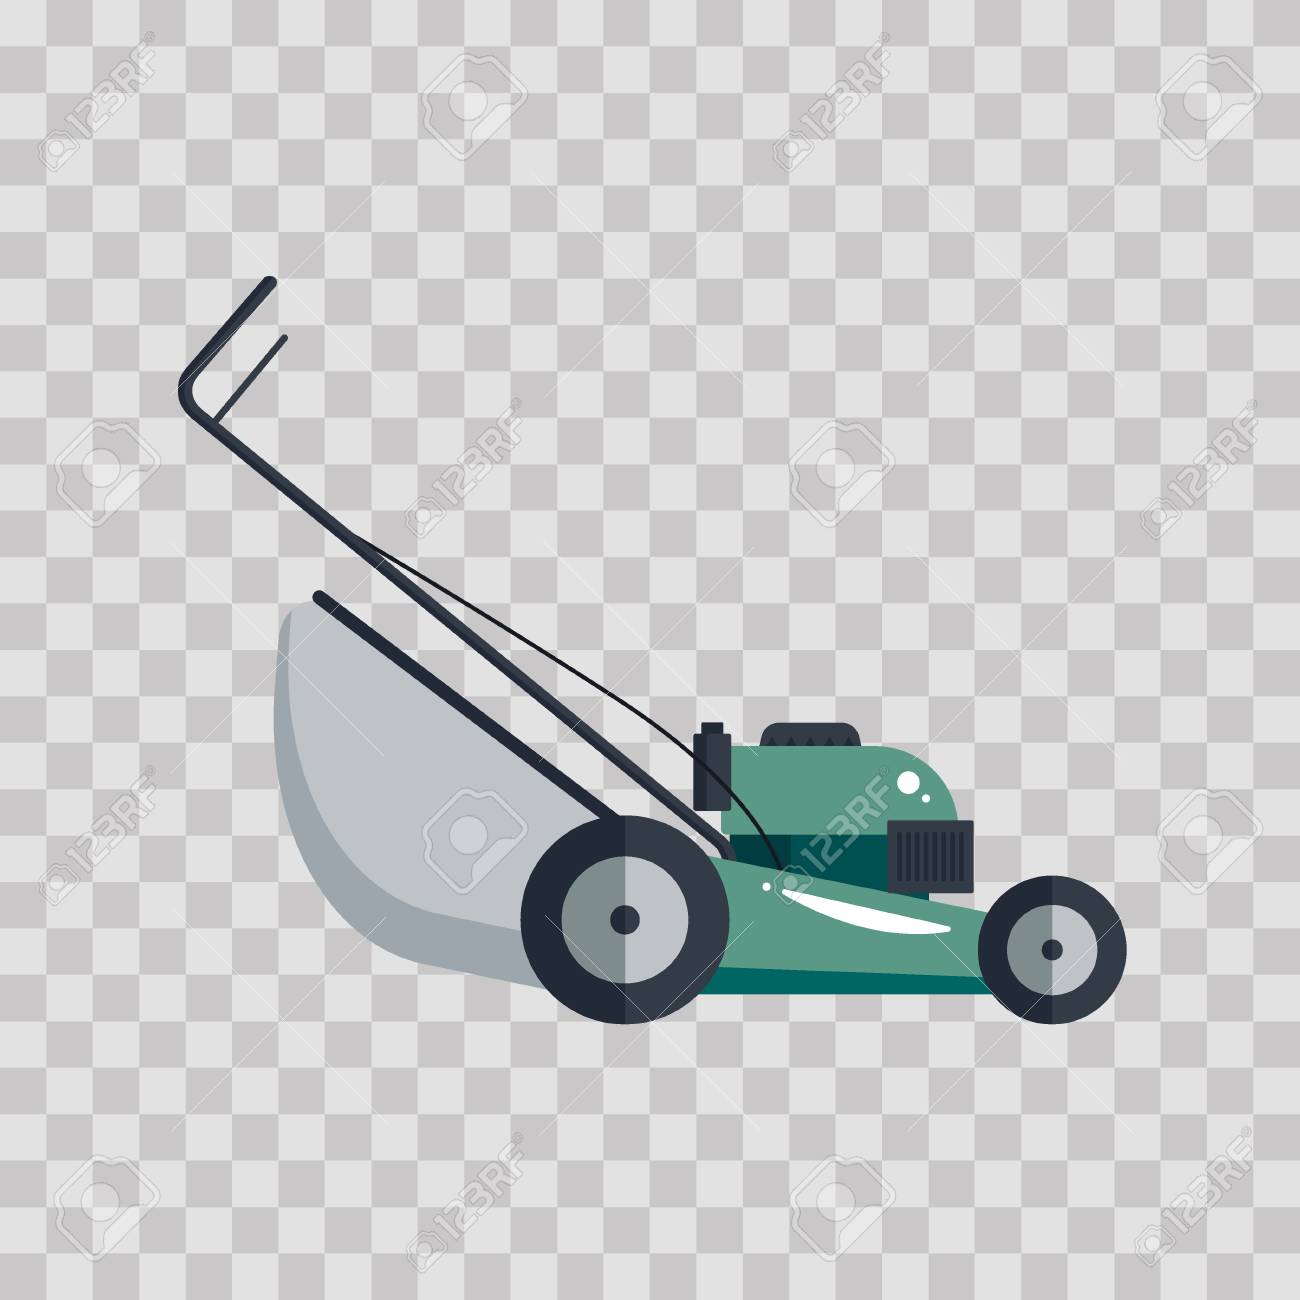 Lawn Mower Machine Icon Technology Equipment Tool Gardening